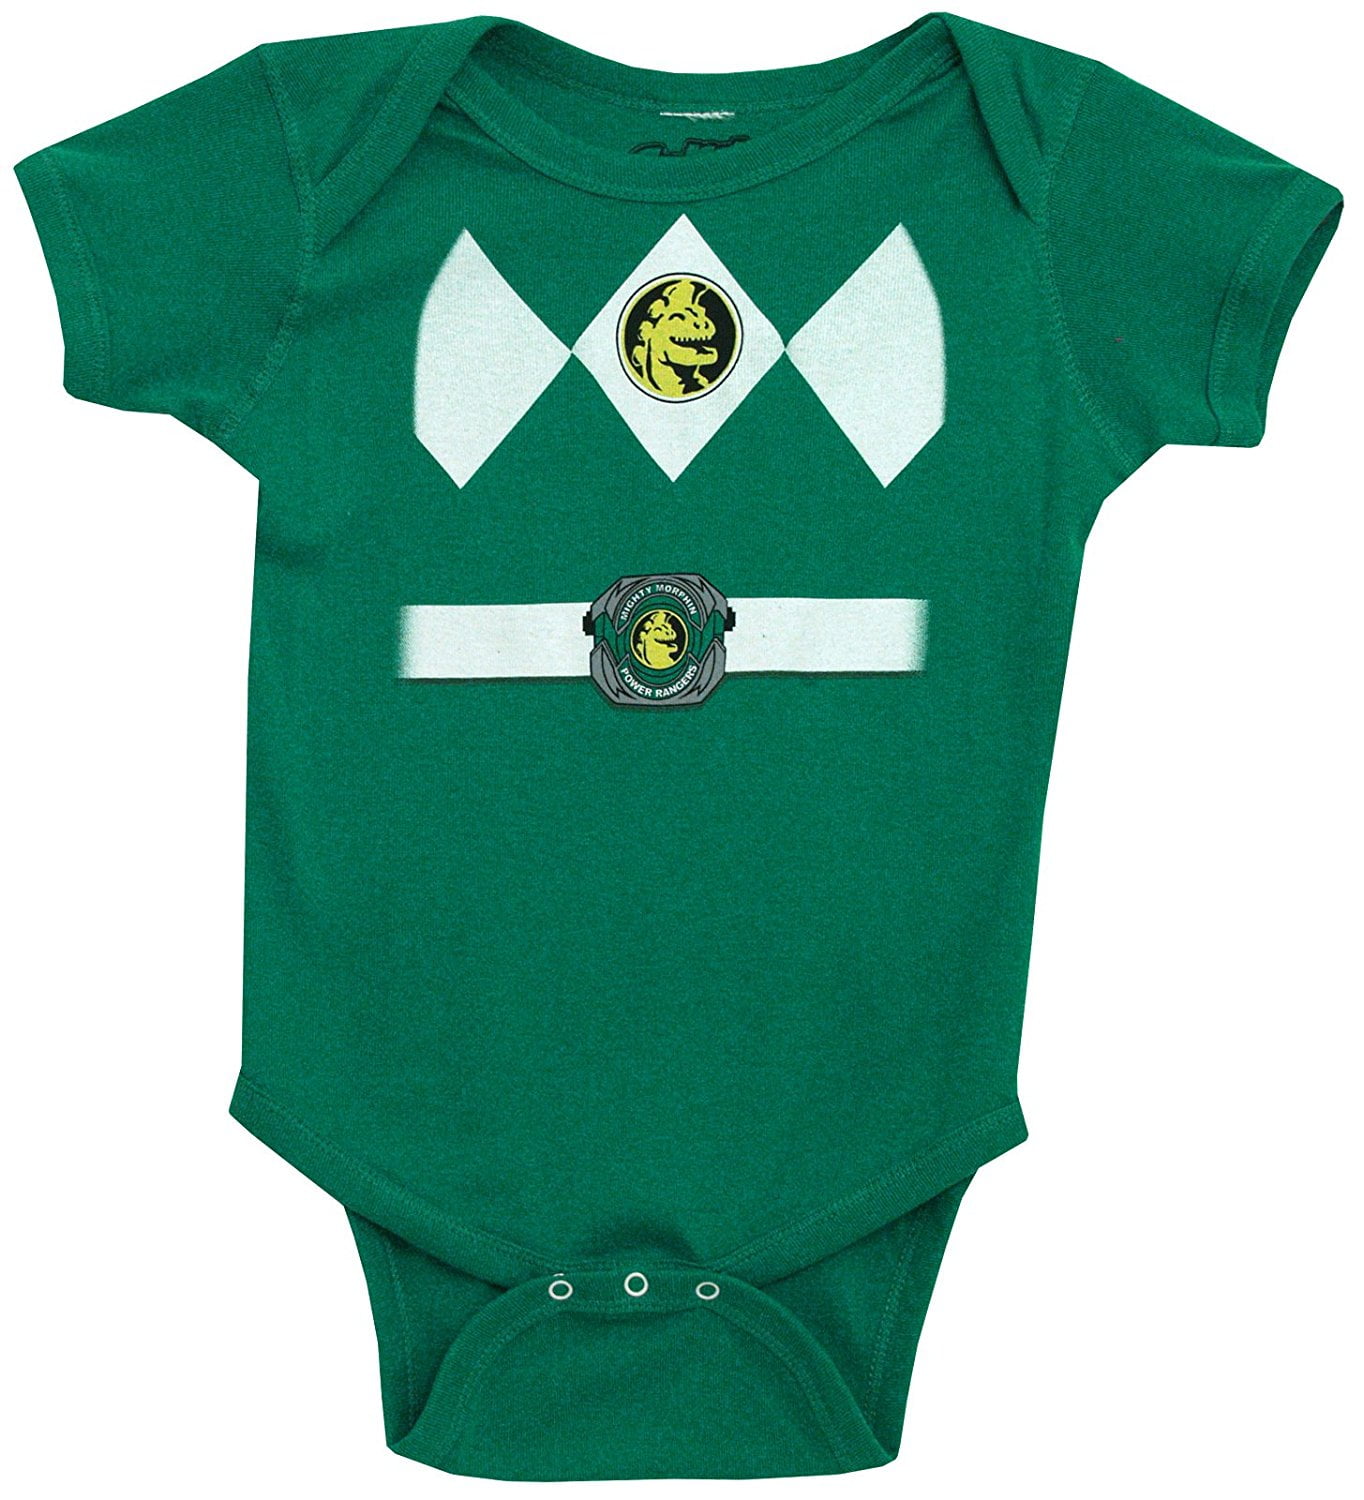 infant rangers jersey